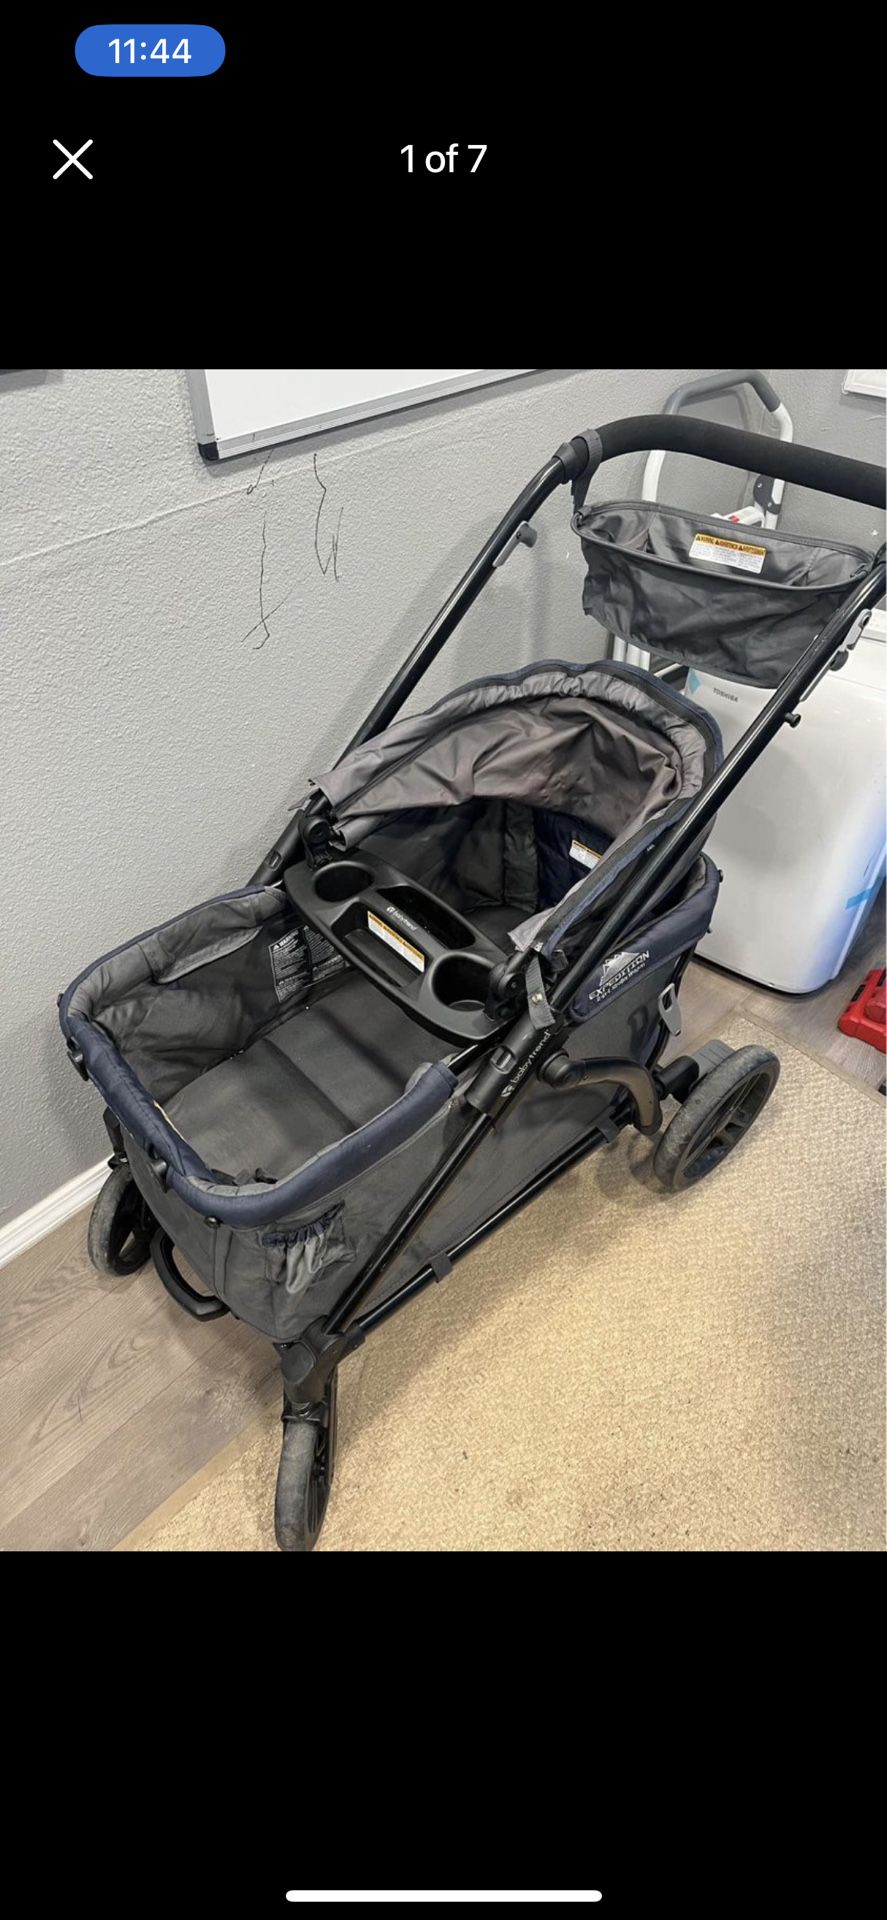 Baby Trend Stroller Wagon 